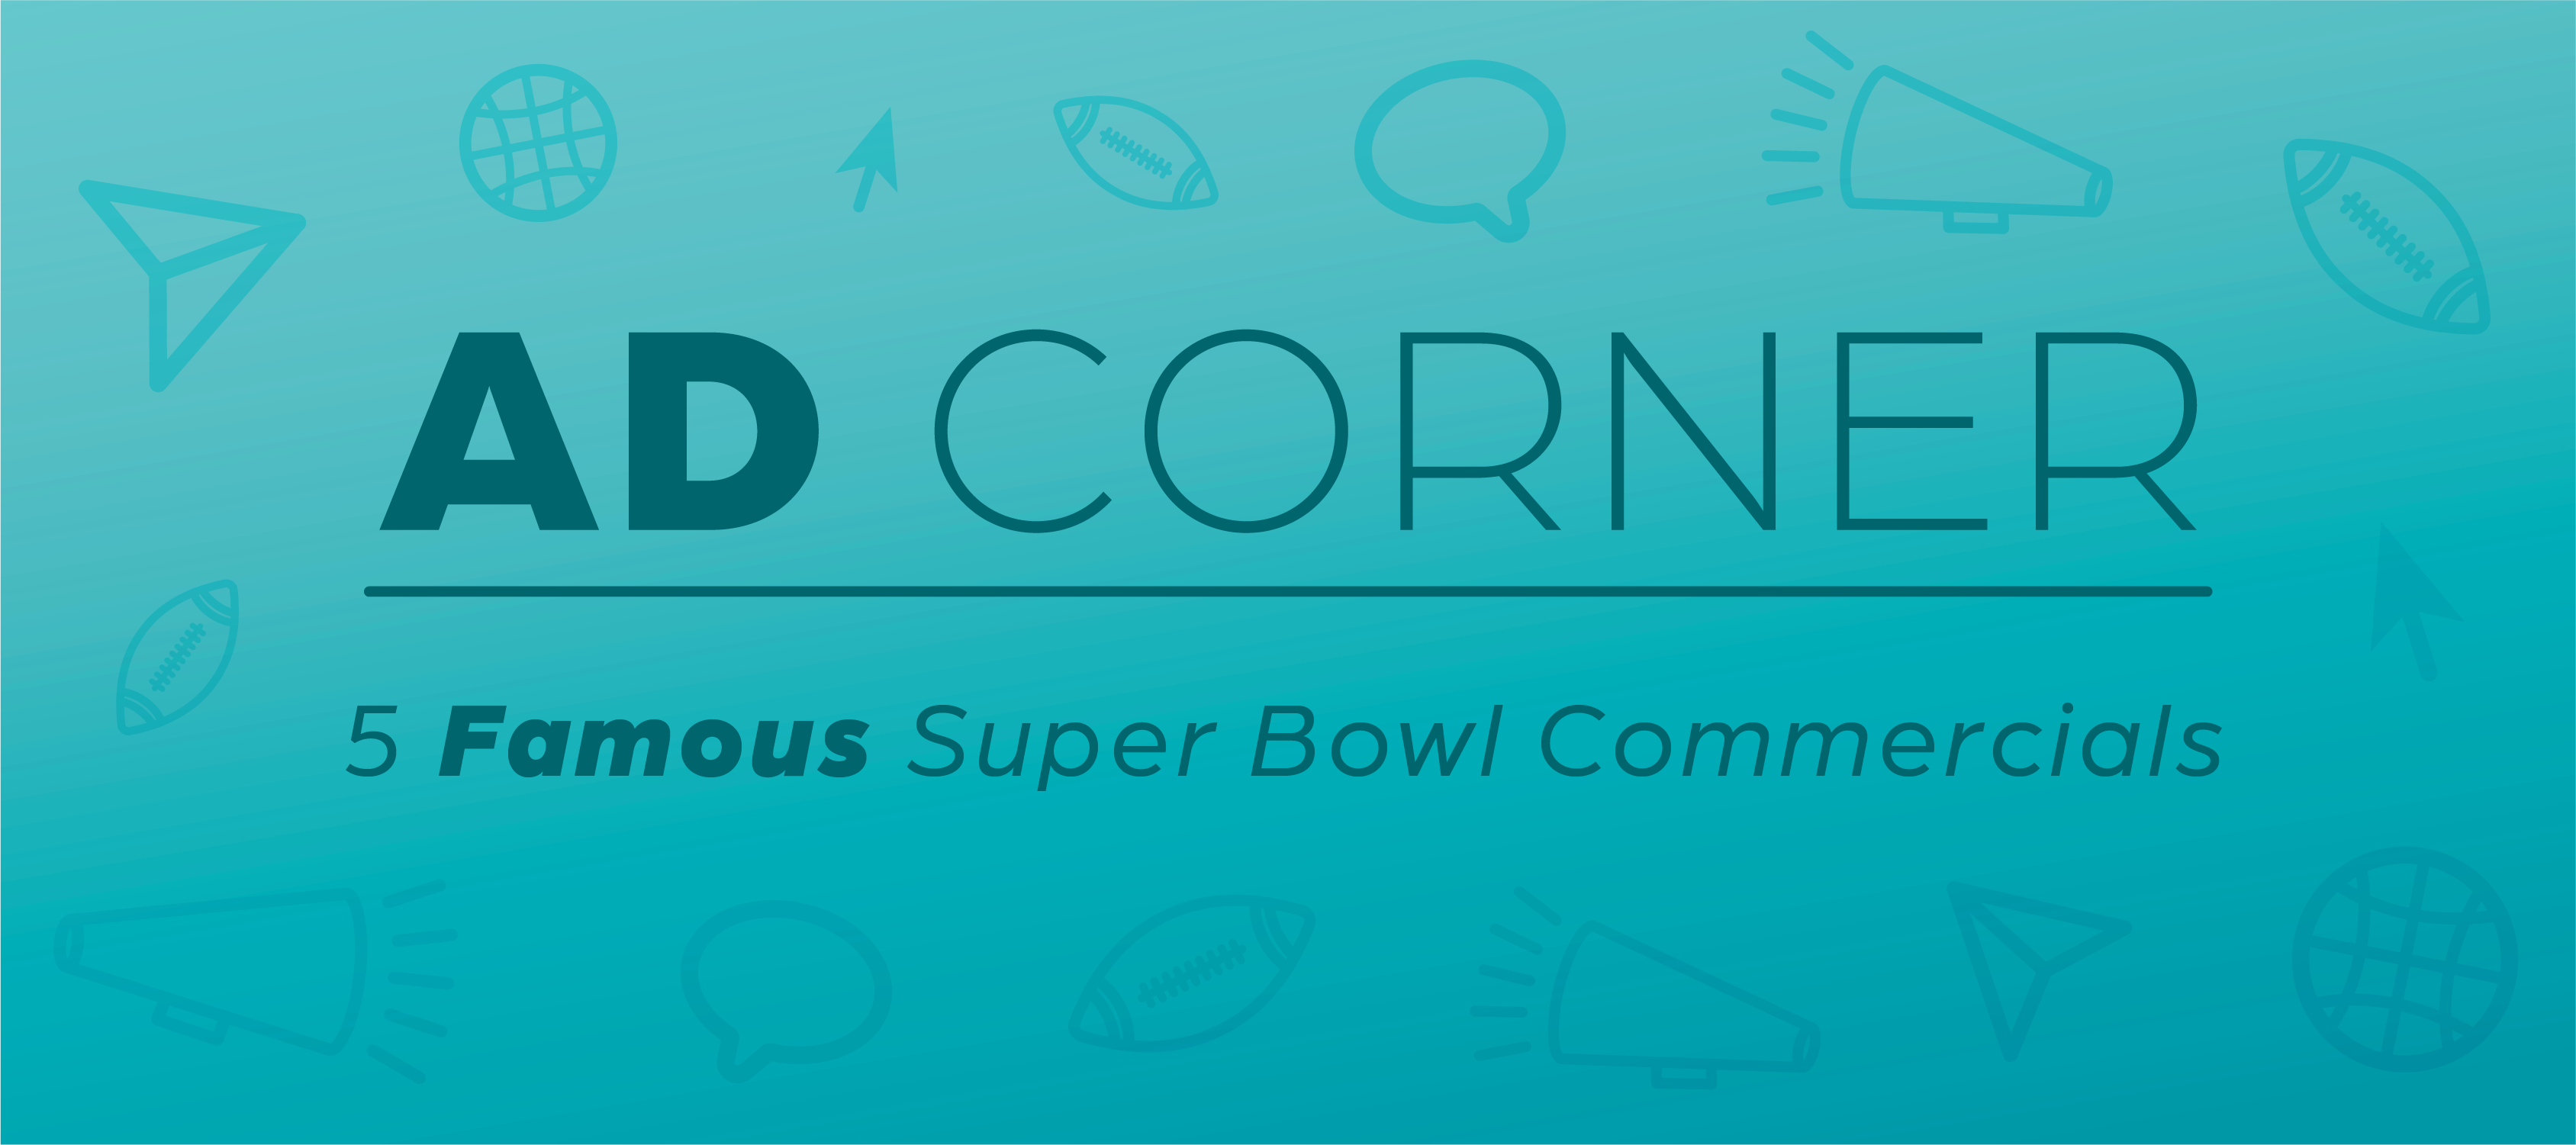 Header image that says "Ad Corner: 5 Famous Super Bowl Commercials"